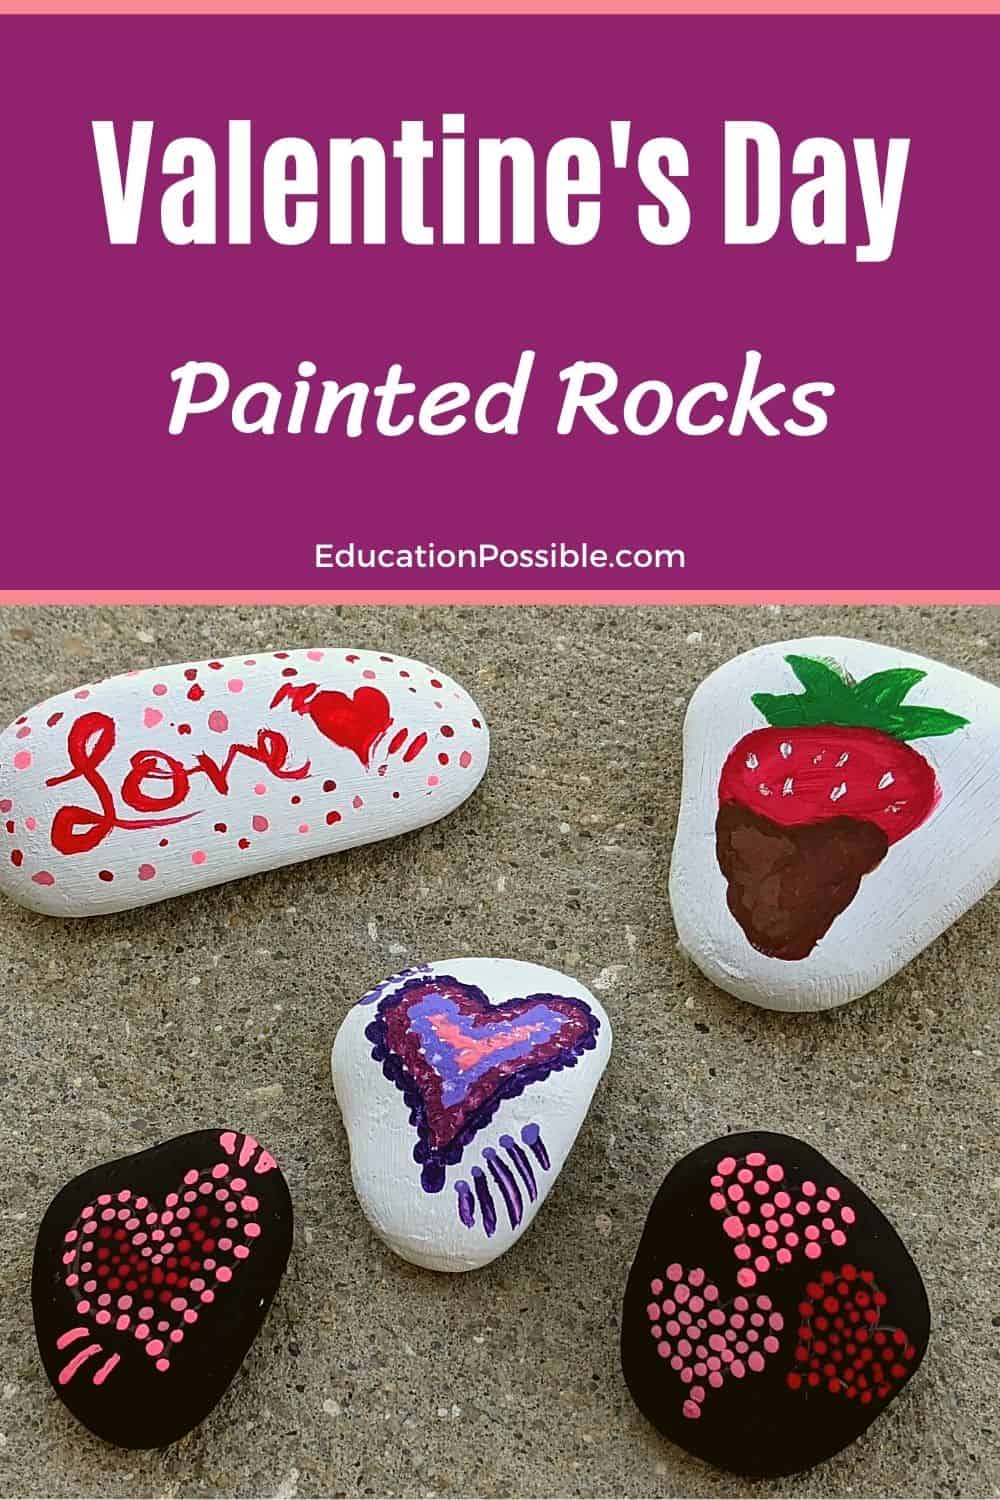 Valentine themed painted rocks